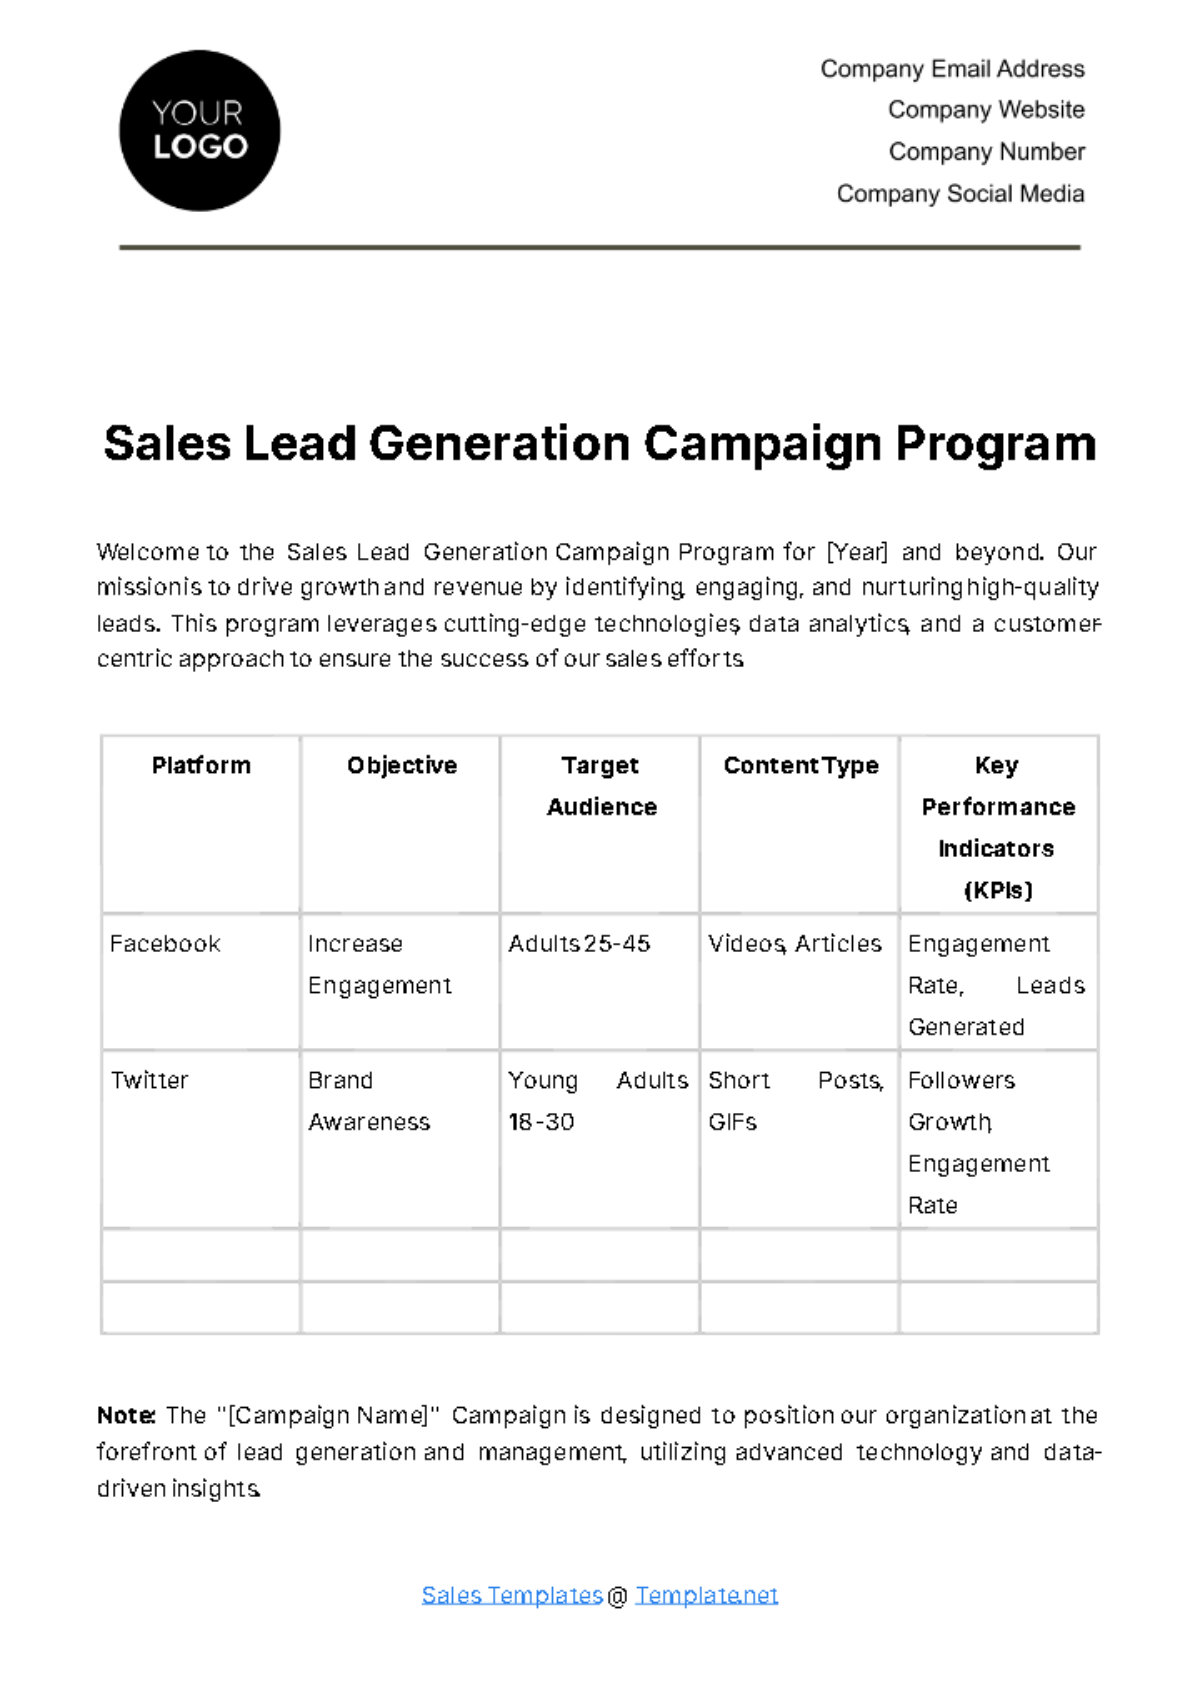 Free Sales Lead Generation Campaign Program Template